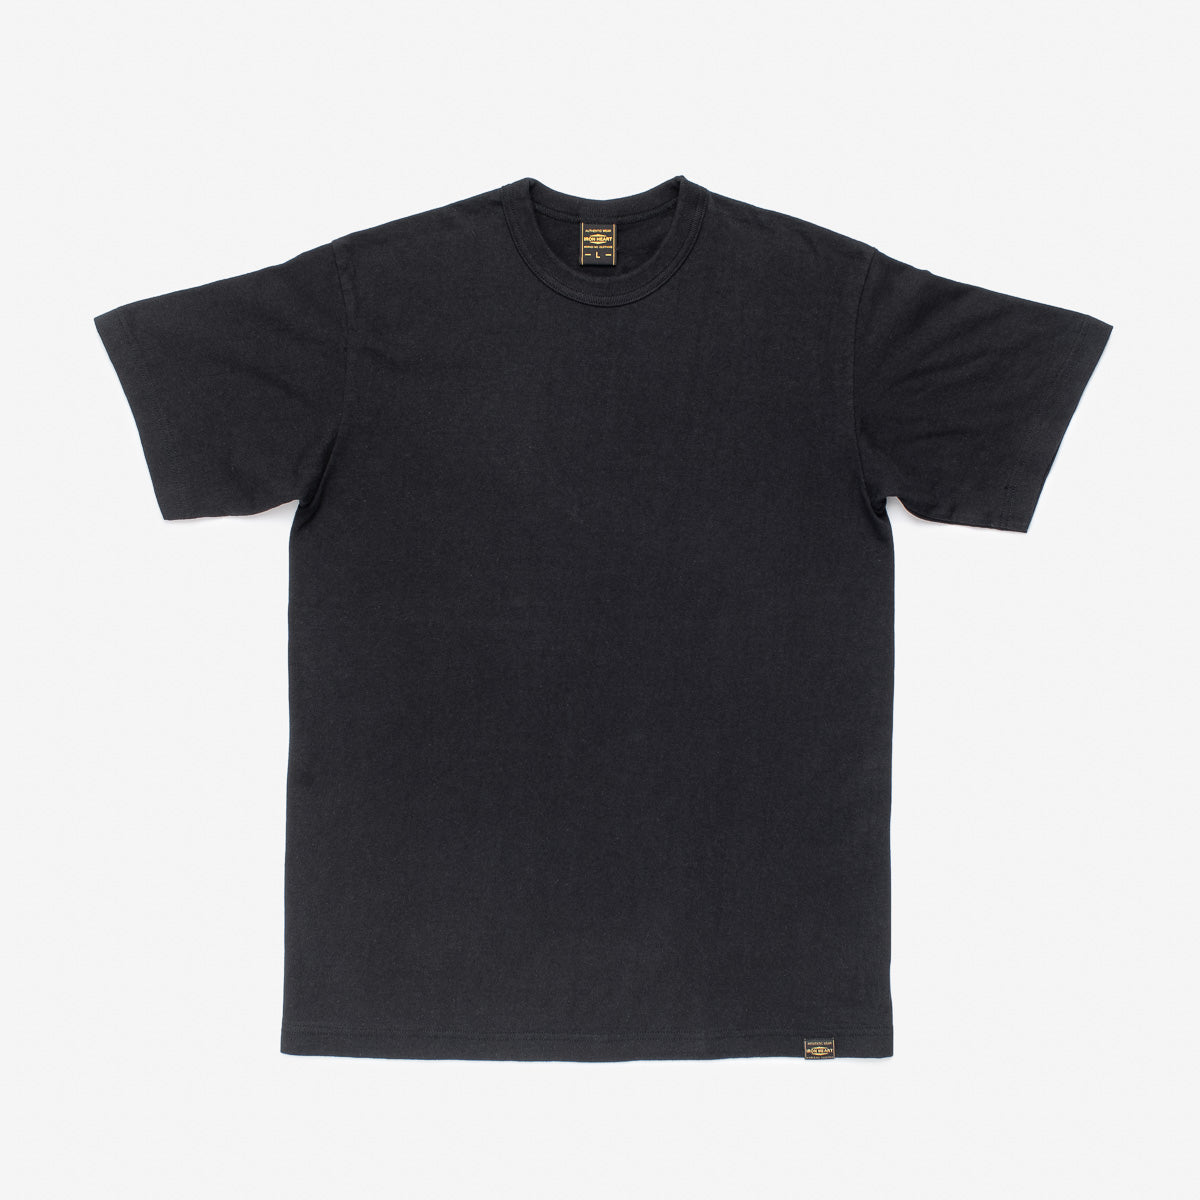 Lancaster Cast Iron T-shirts S / Black